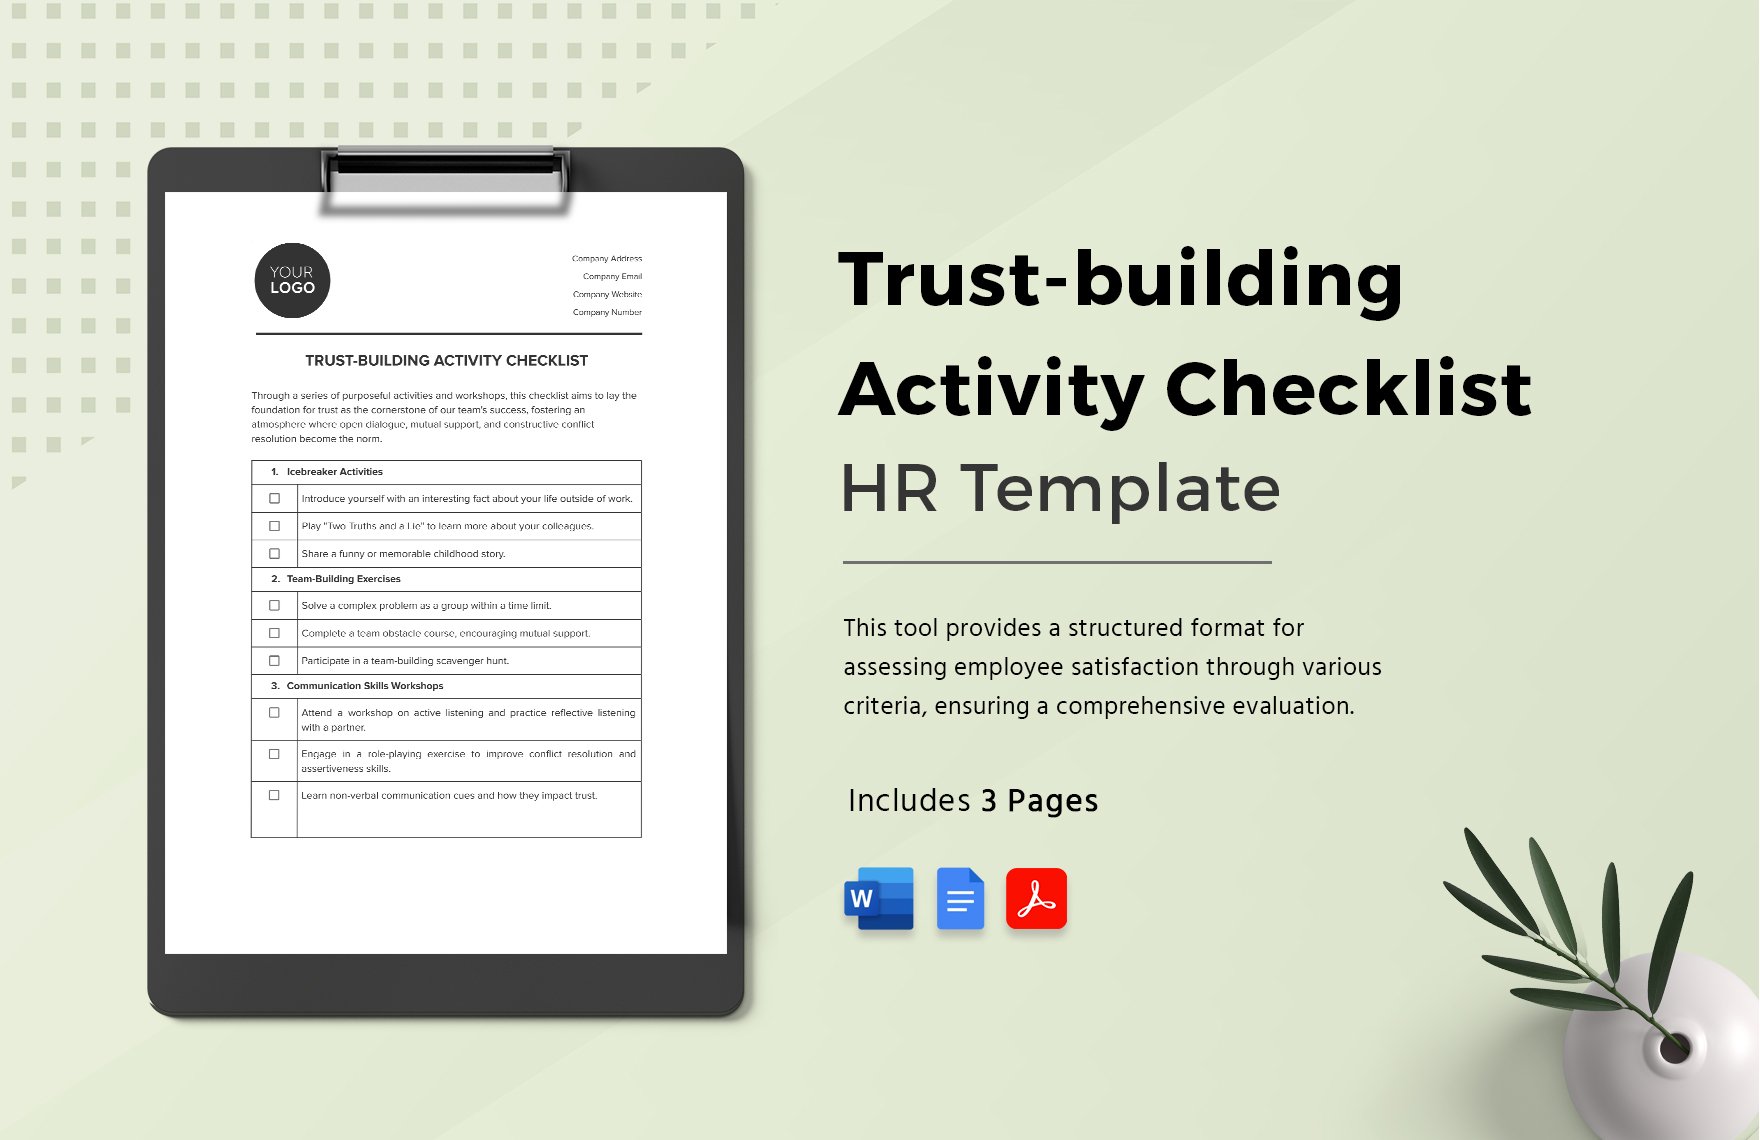 Trust-building Activity Checklist HR Template